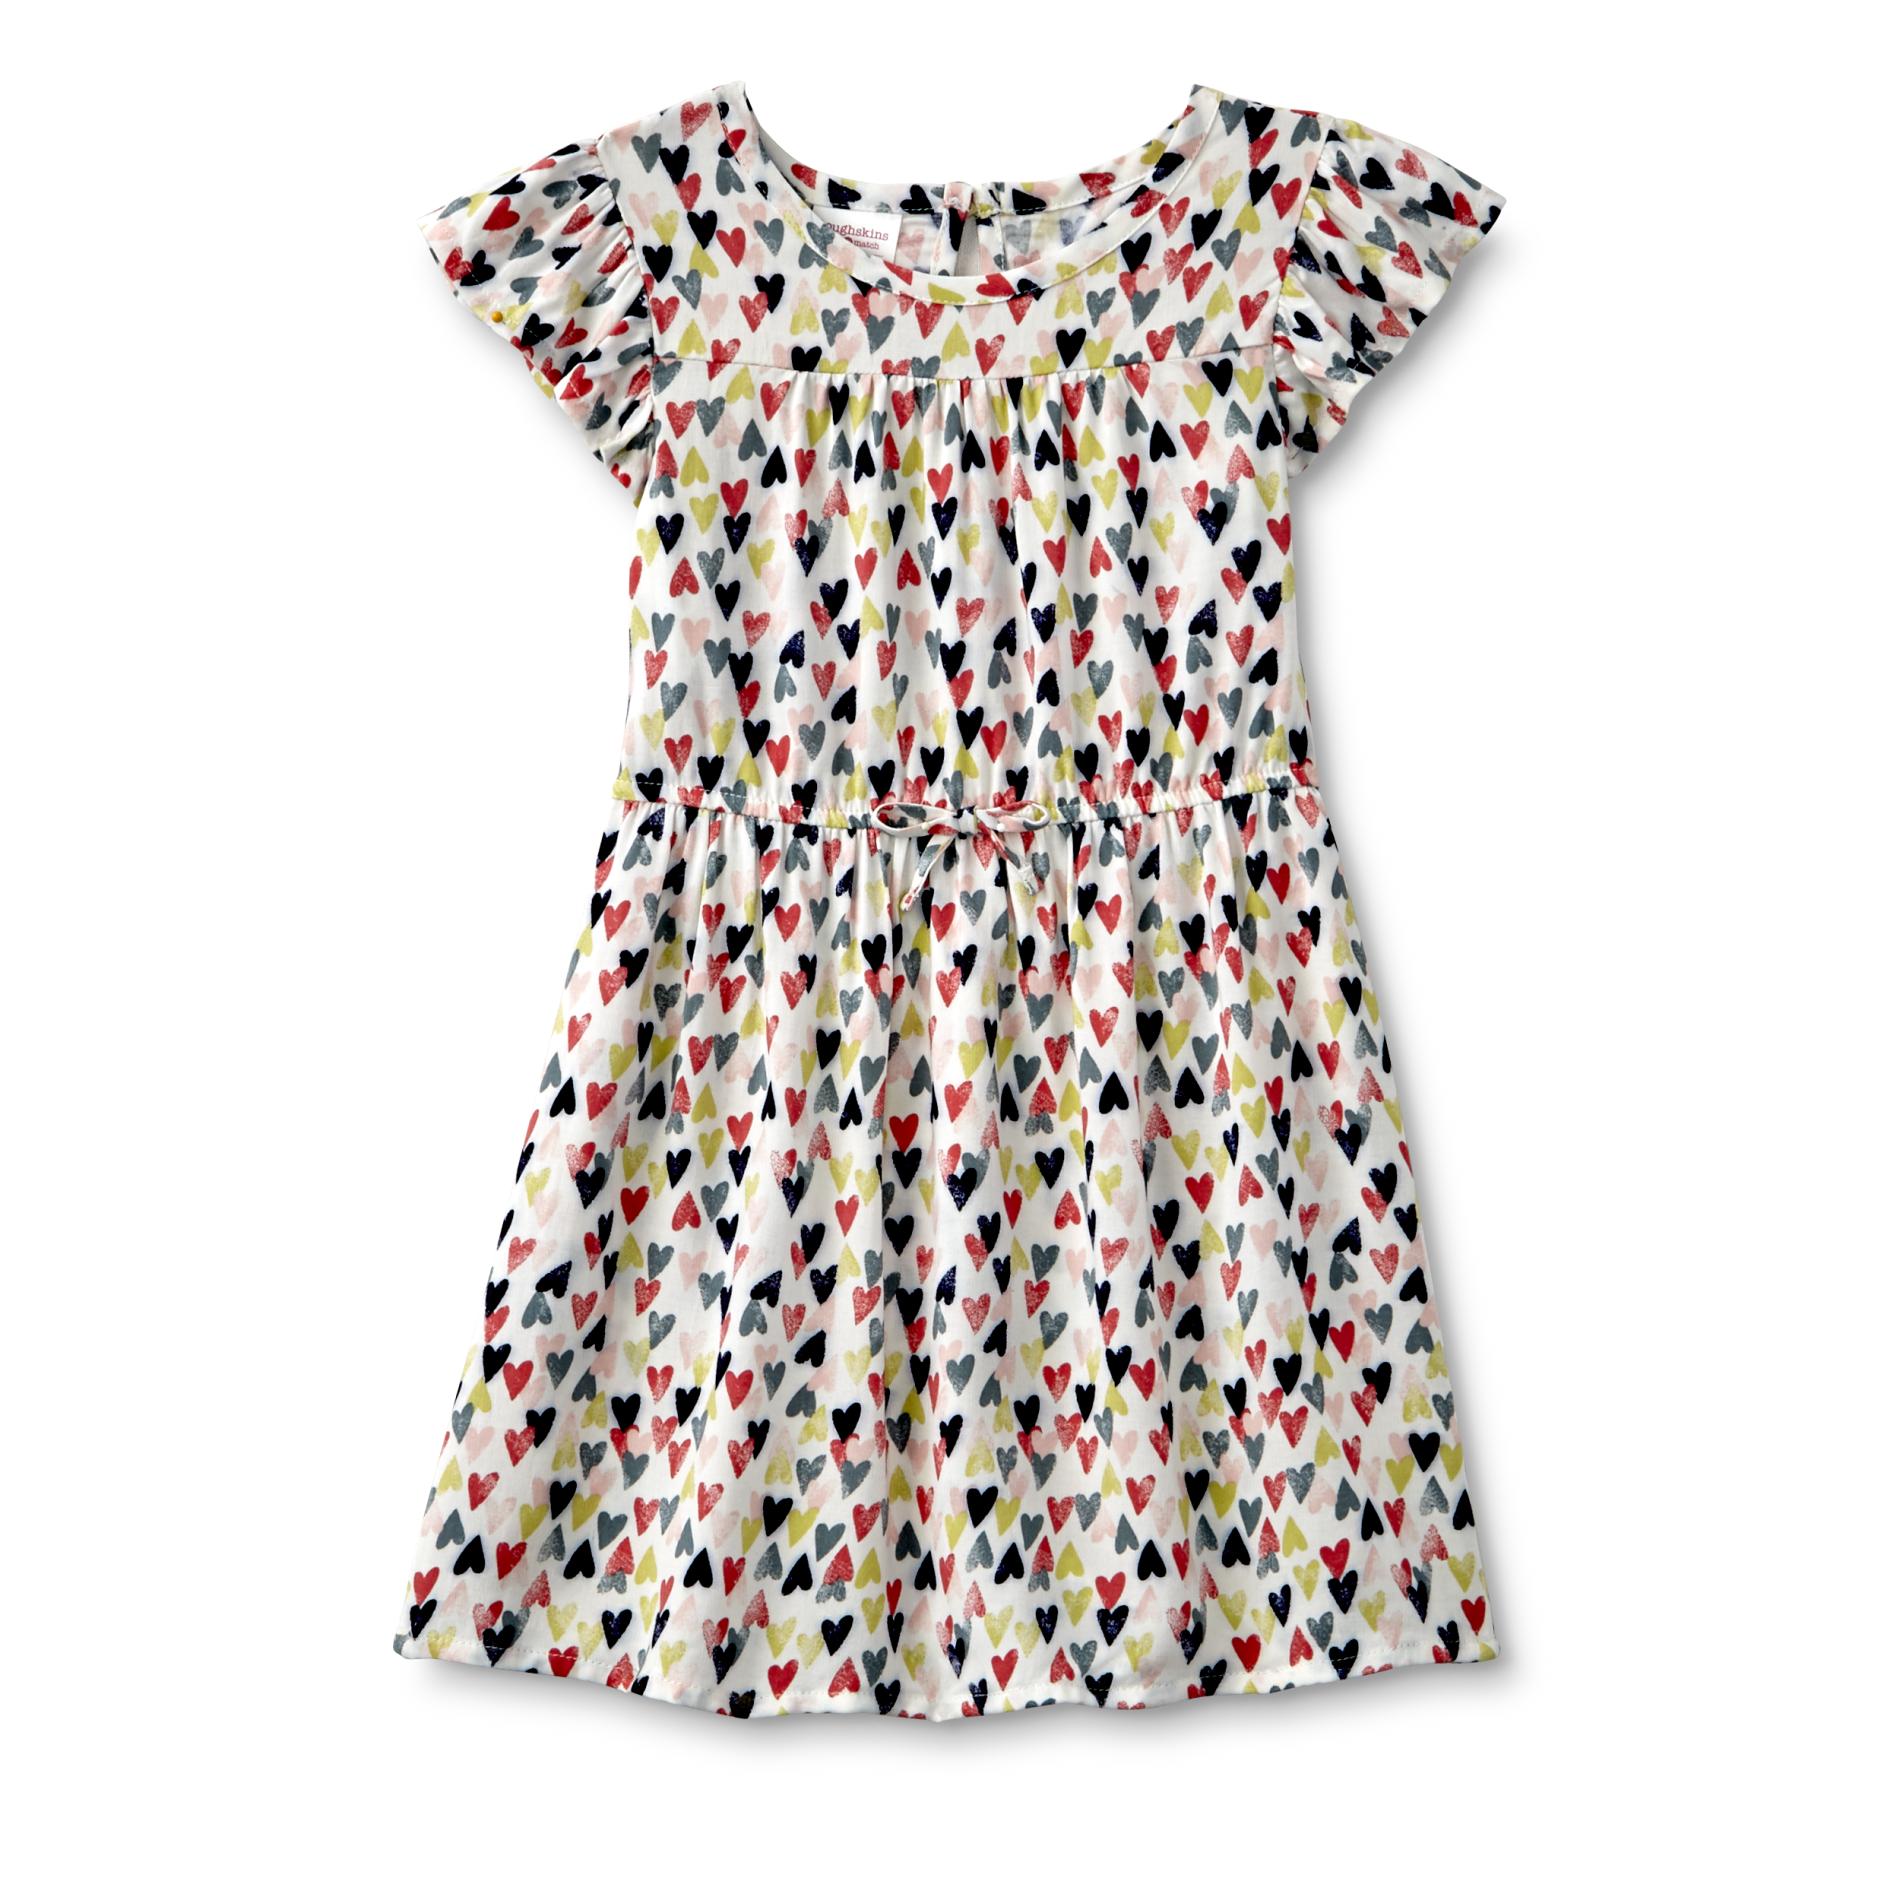 Toughskins Infant & Toddler Girl's Dress - Hearts